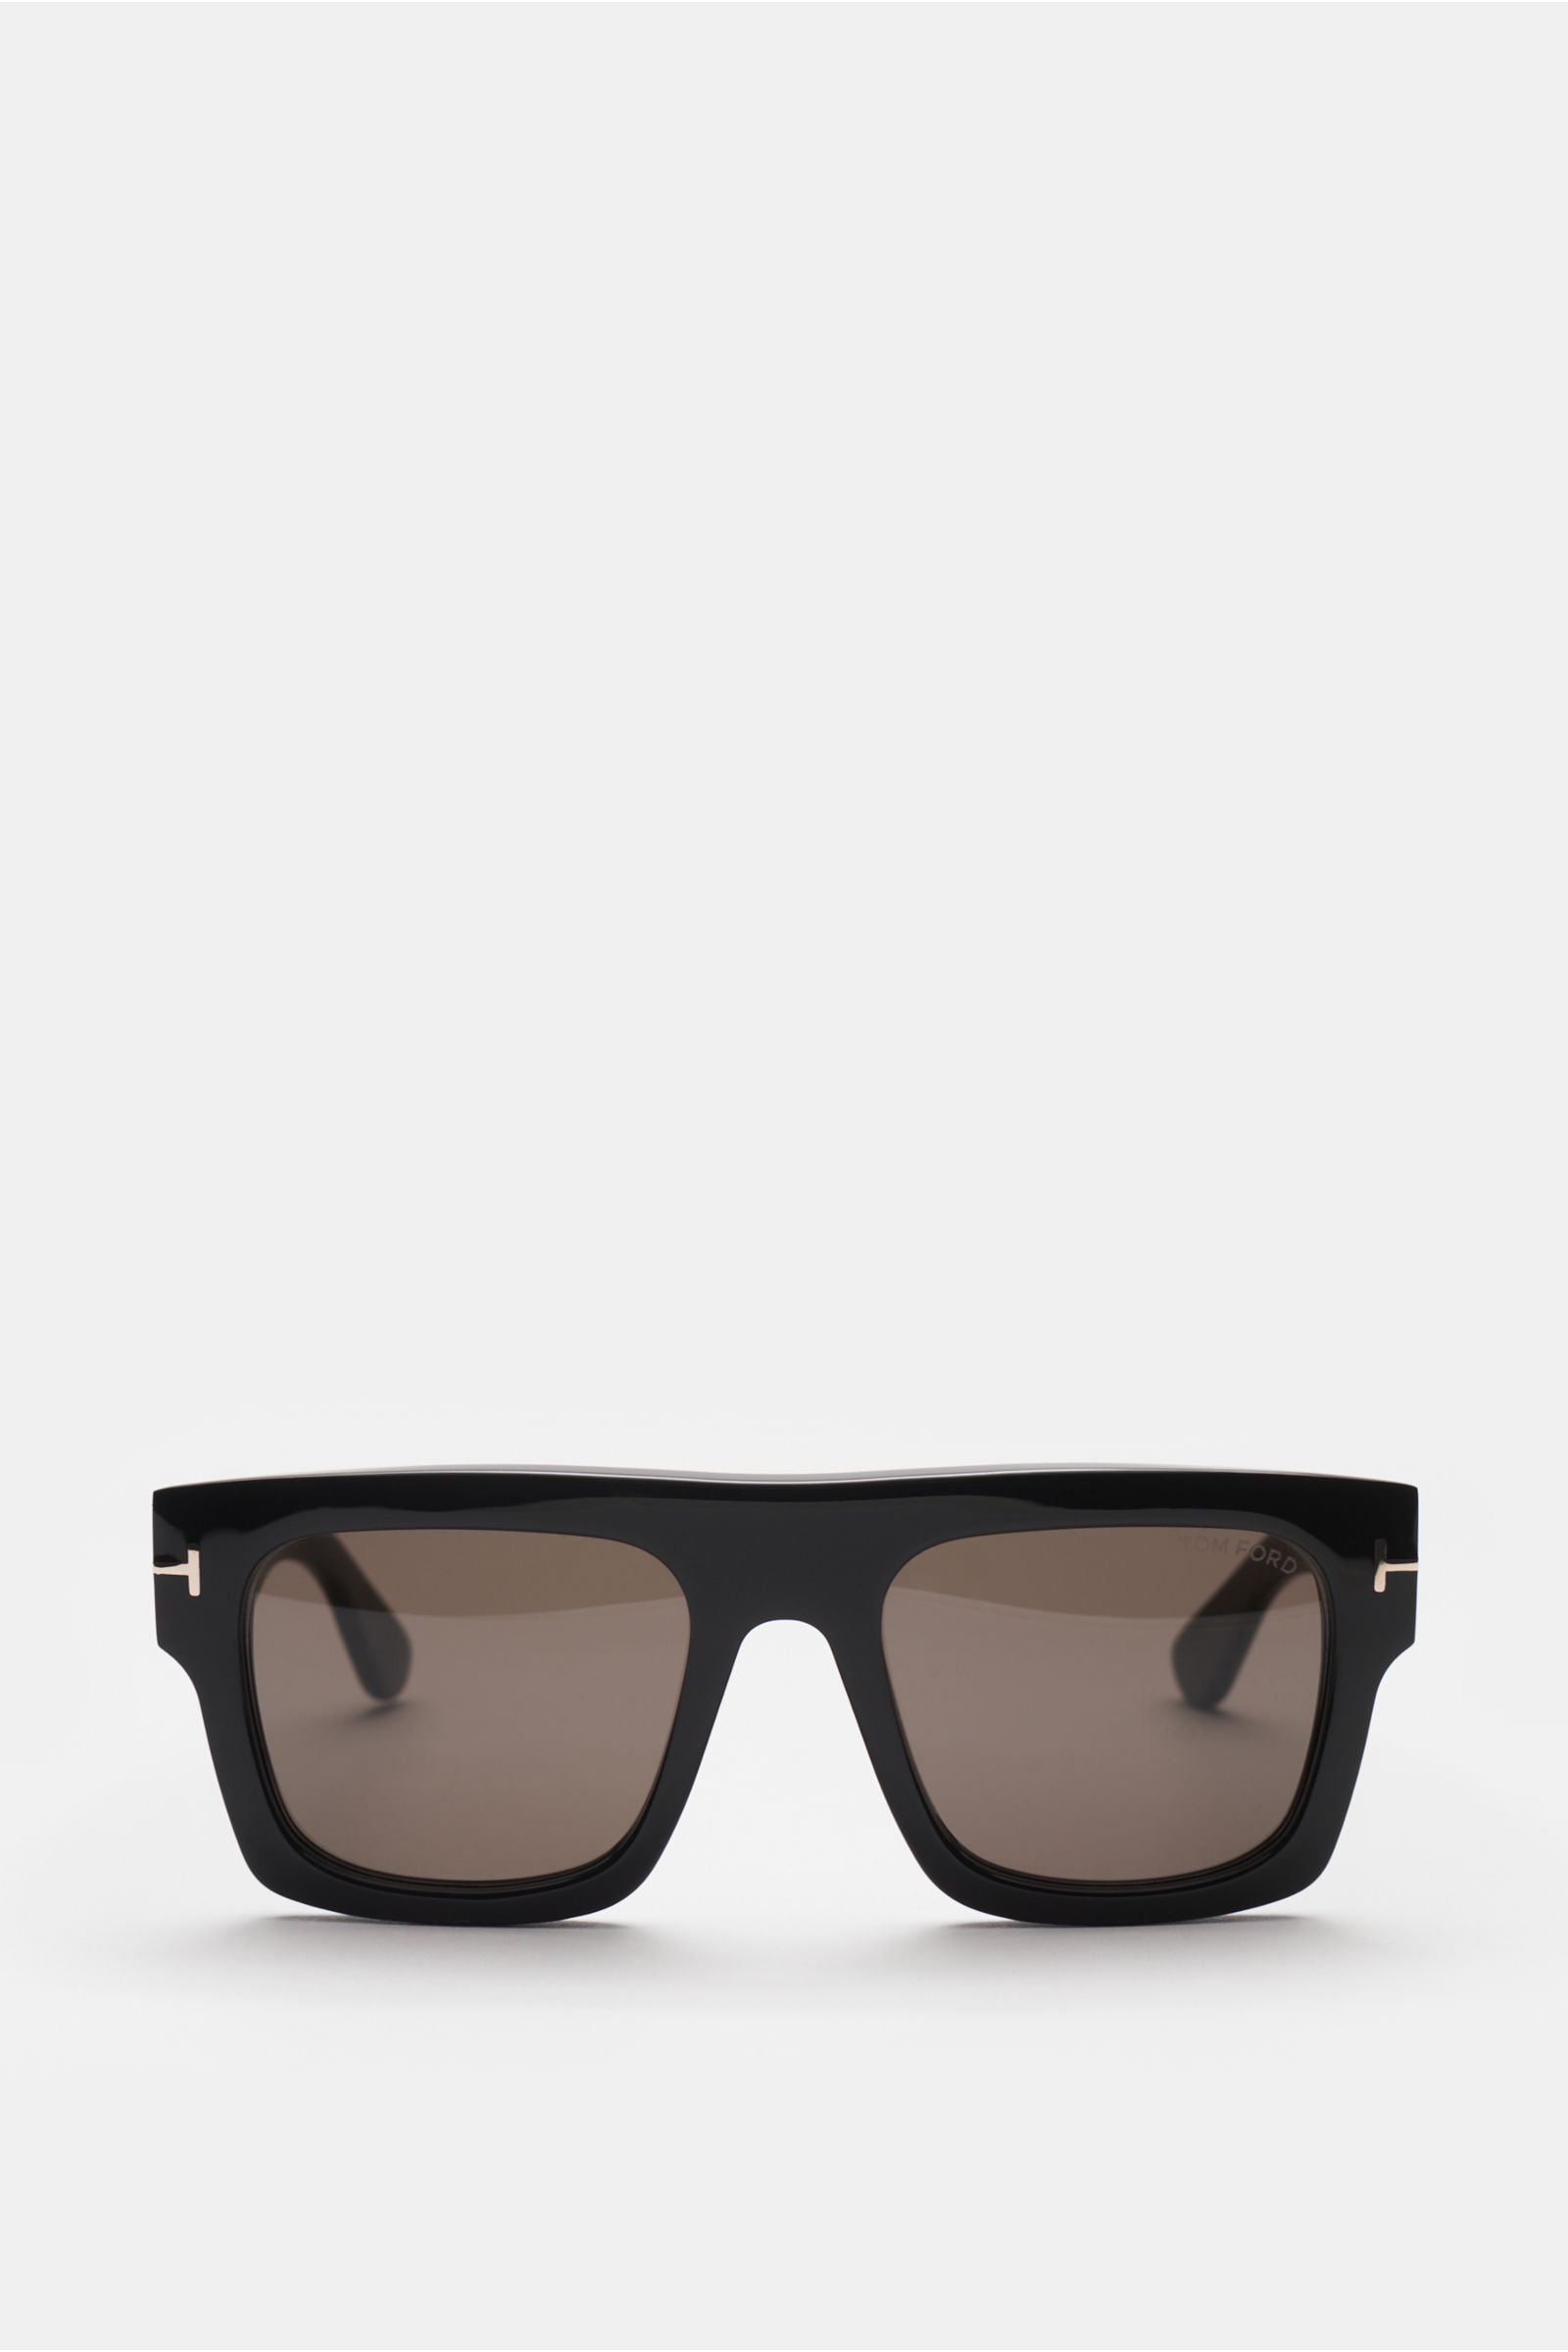 Sunglasses 'Fausto' black/grey